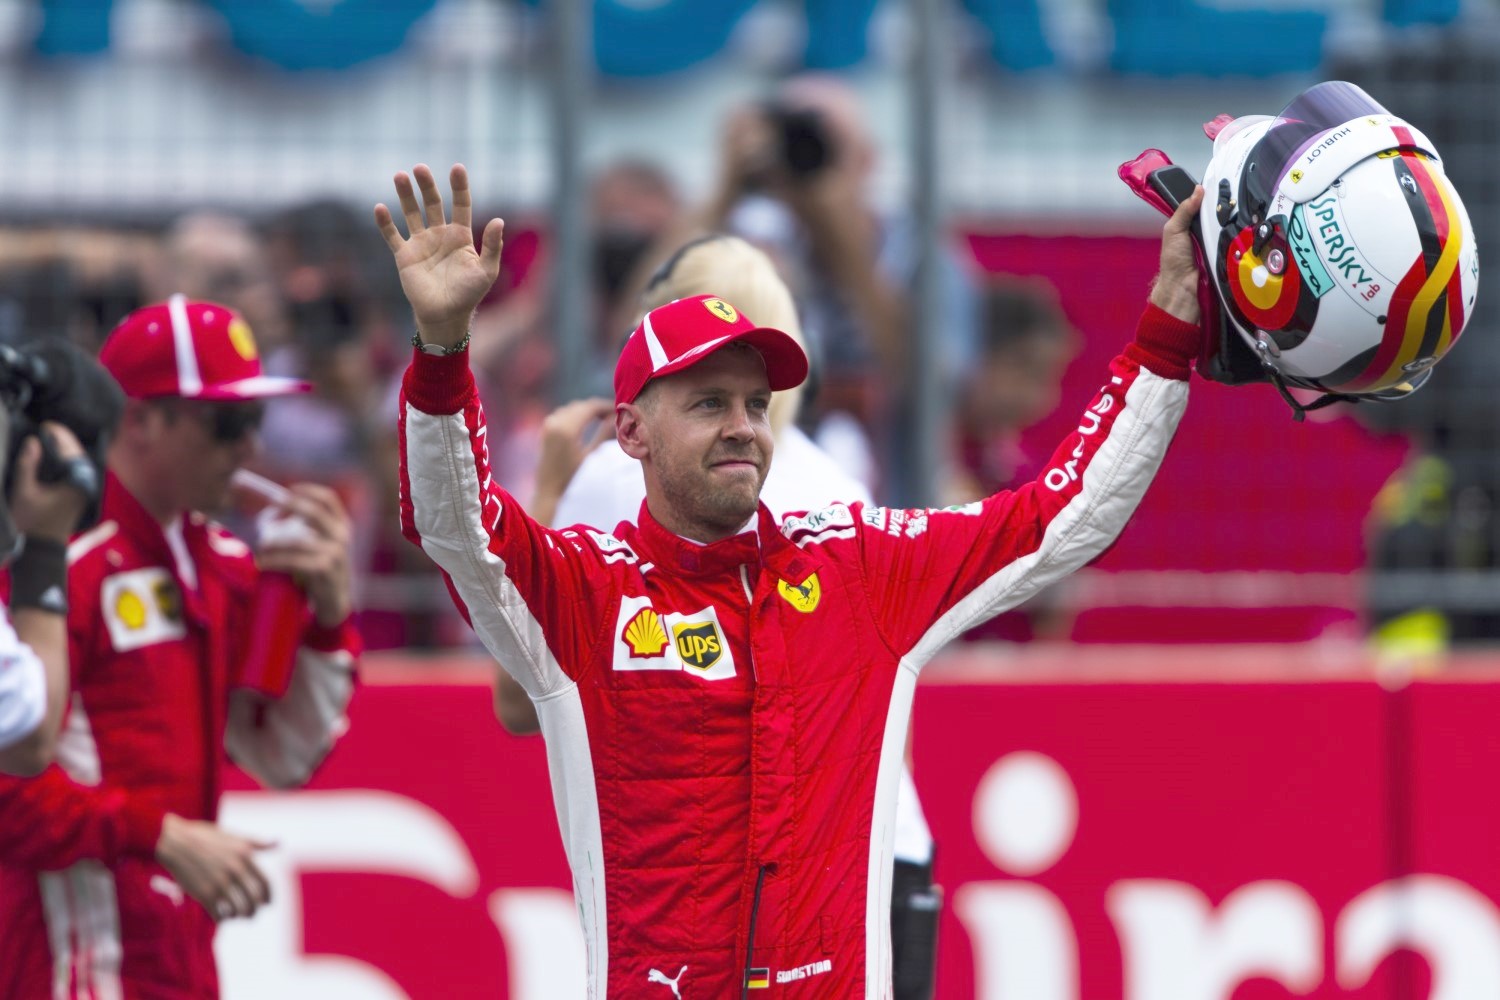 Vettel waves to the German crowd